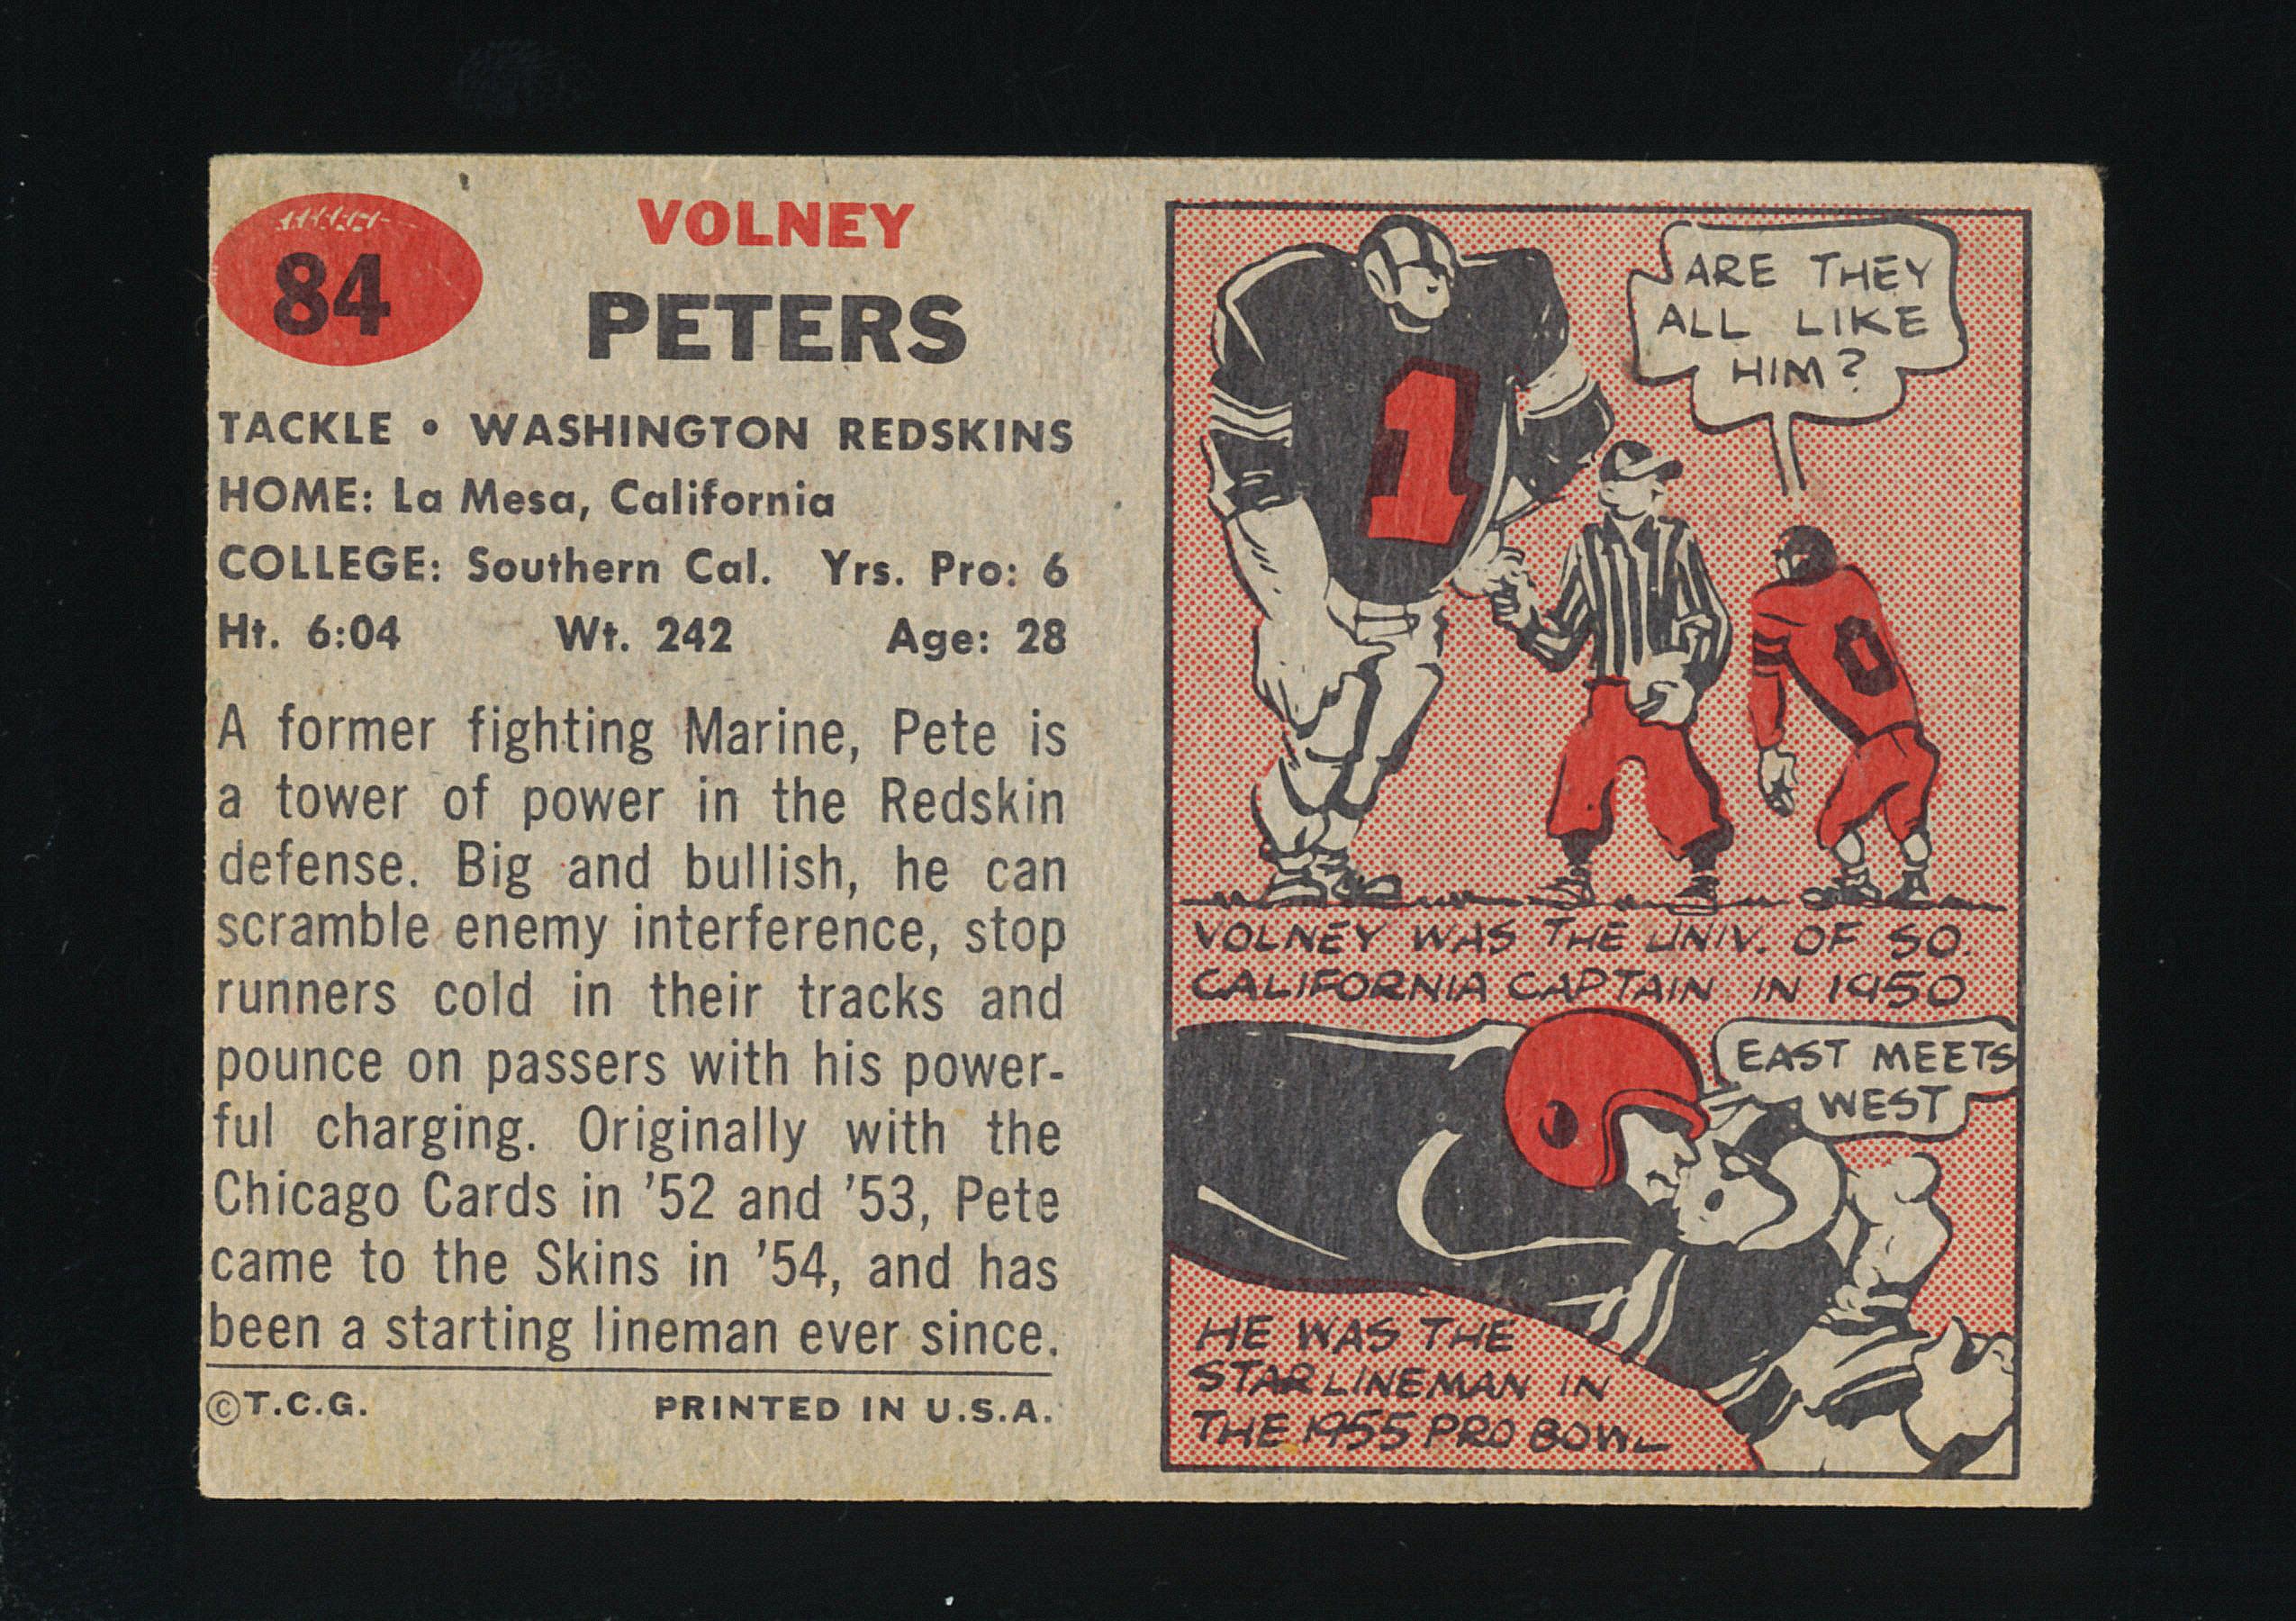 1957 Topps Football Card #84 Volney Peters Washington Redskins